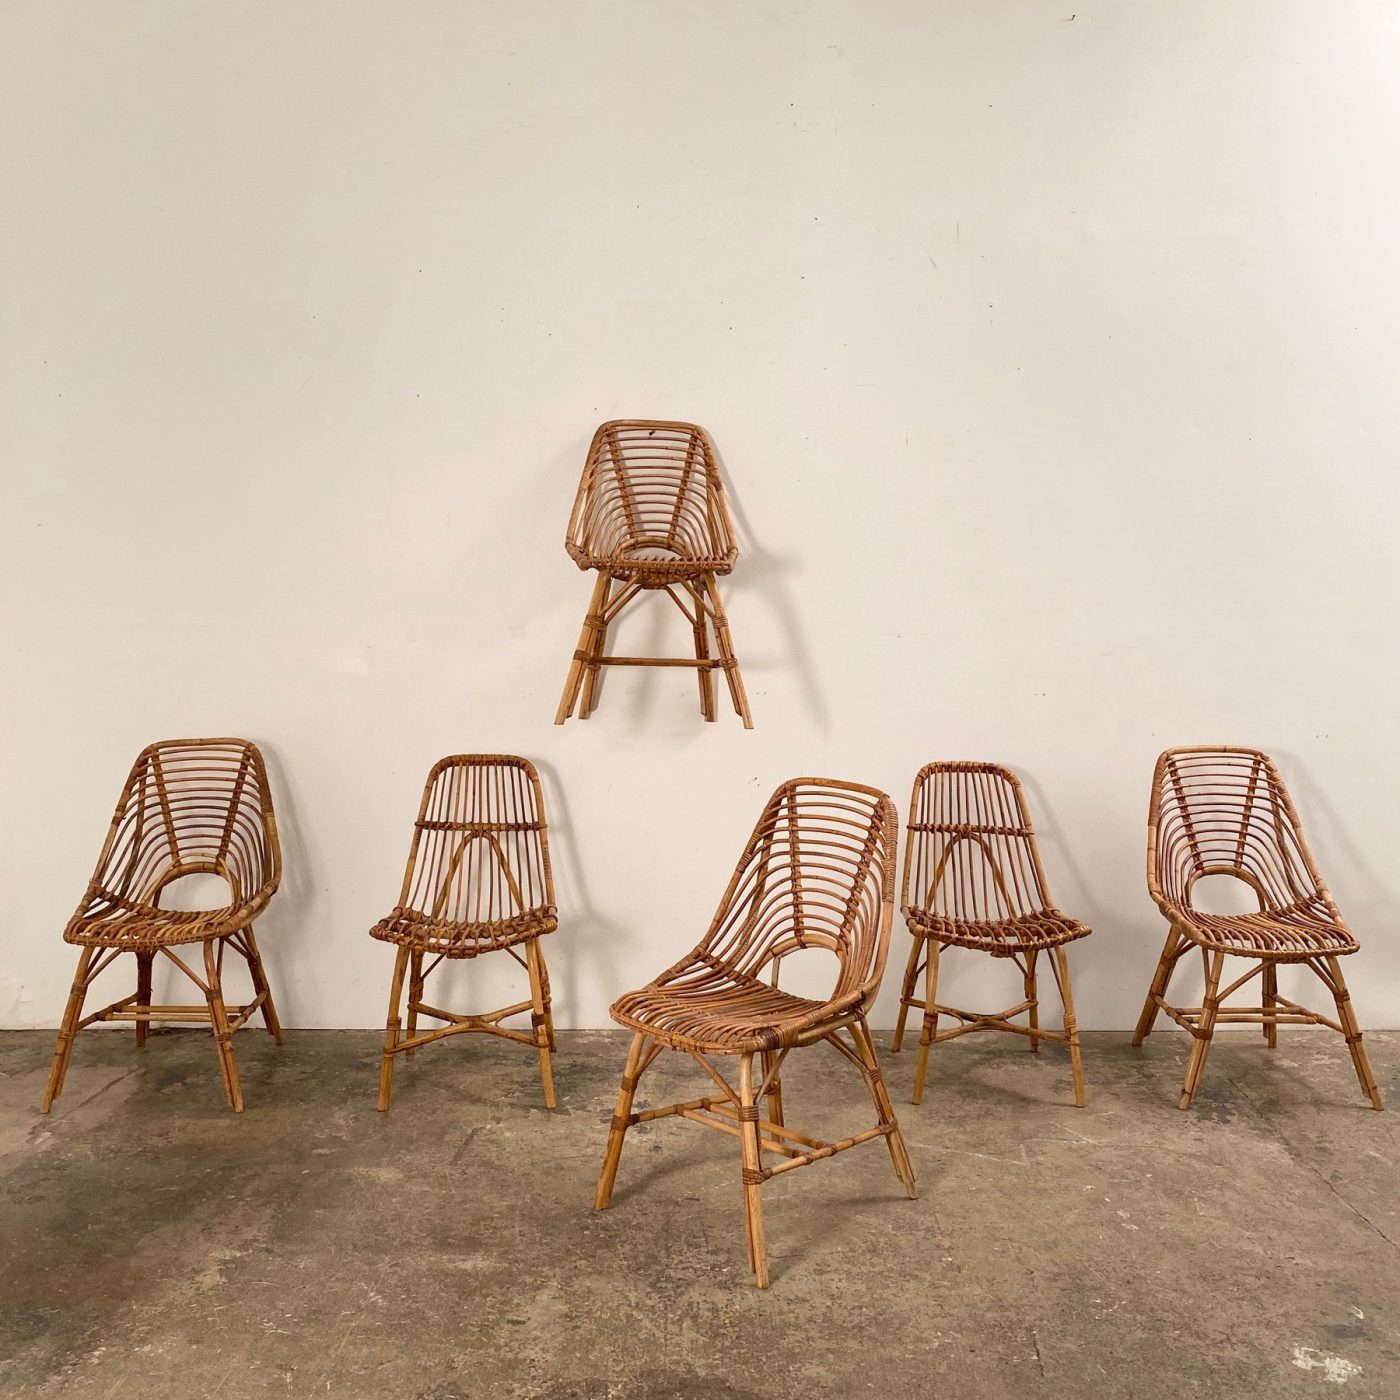 objet-vagabond-rattan-chairs0008